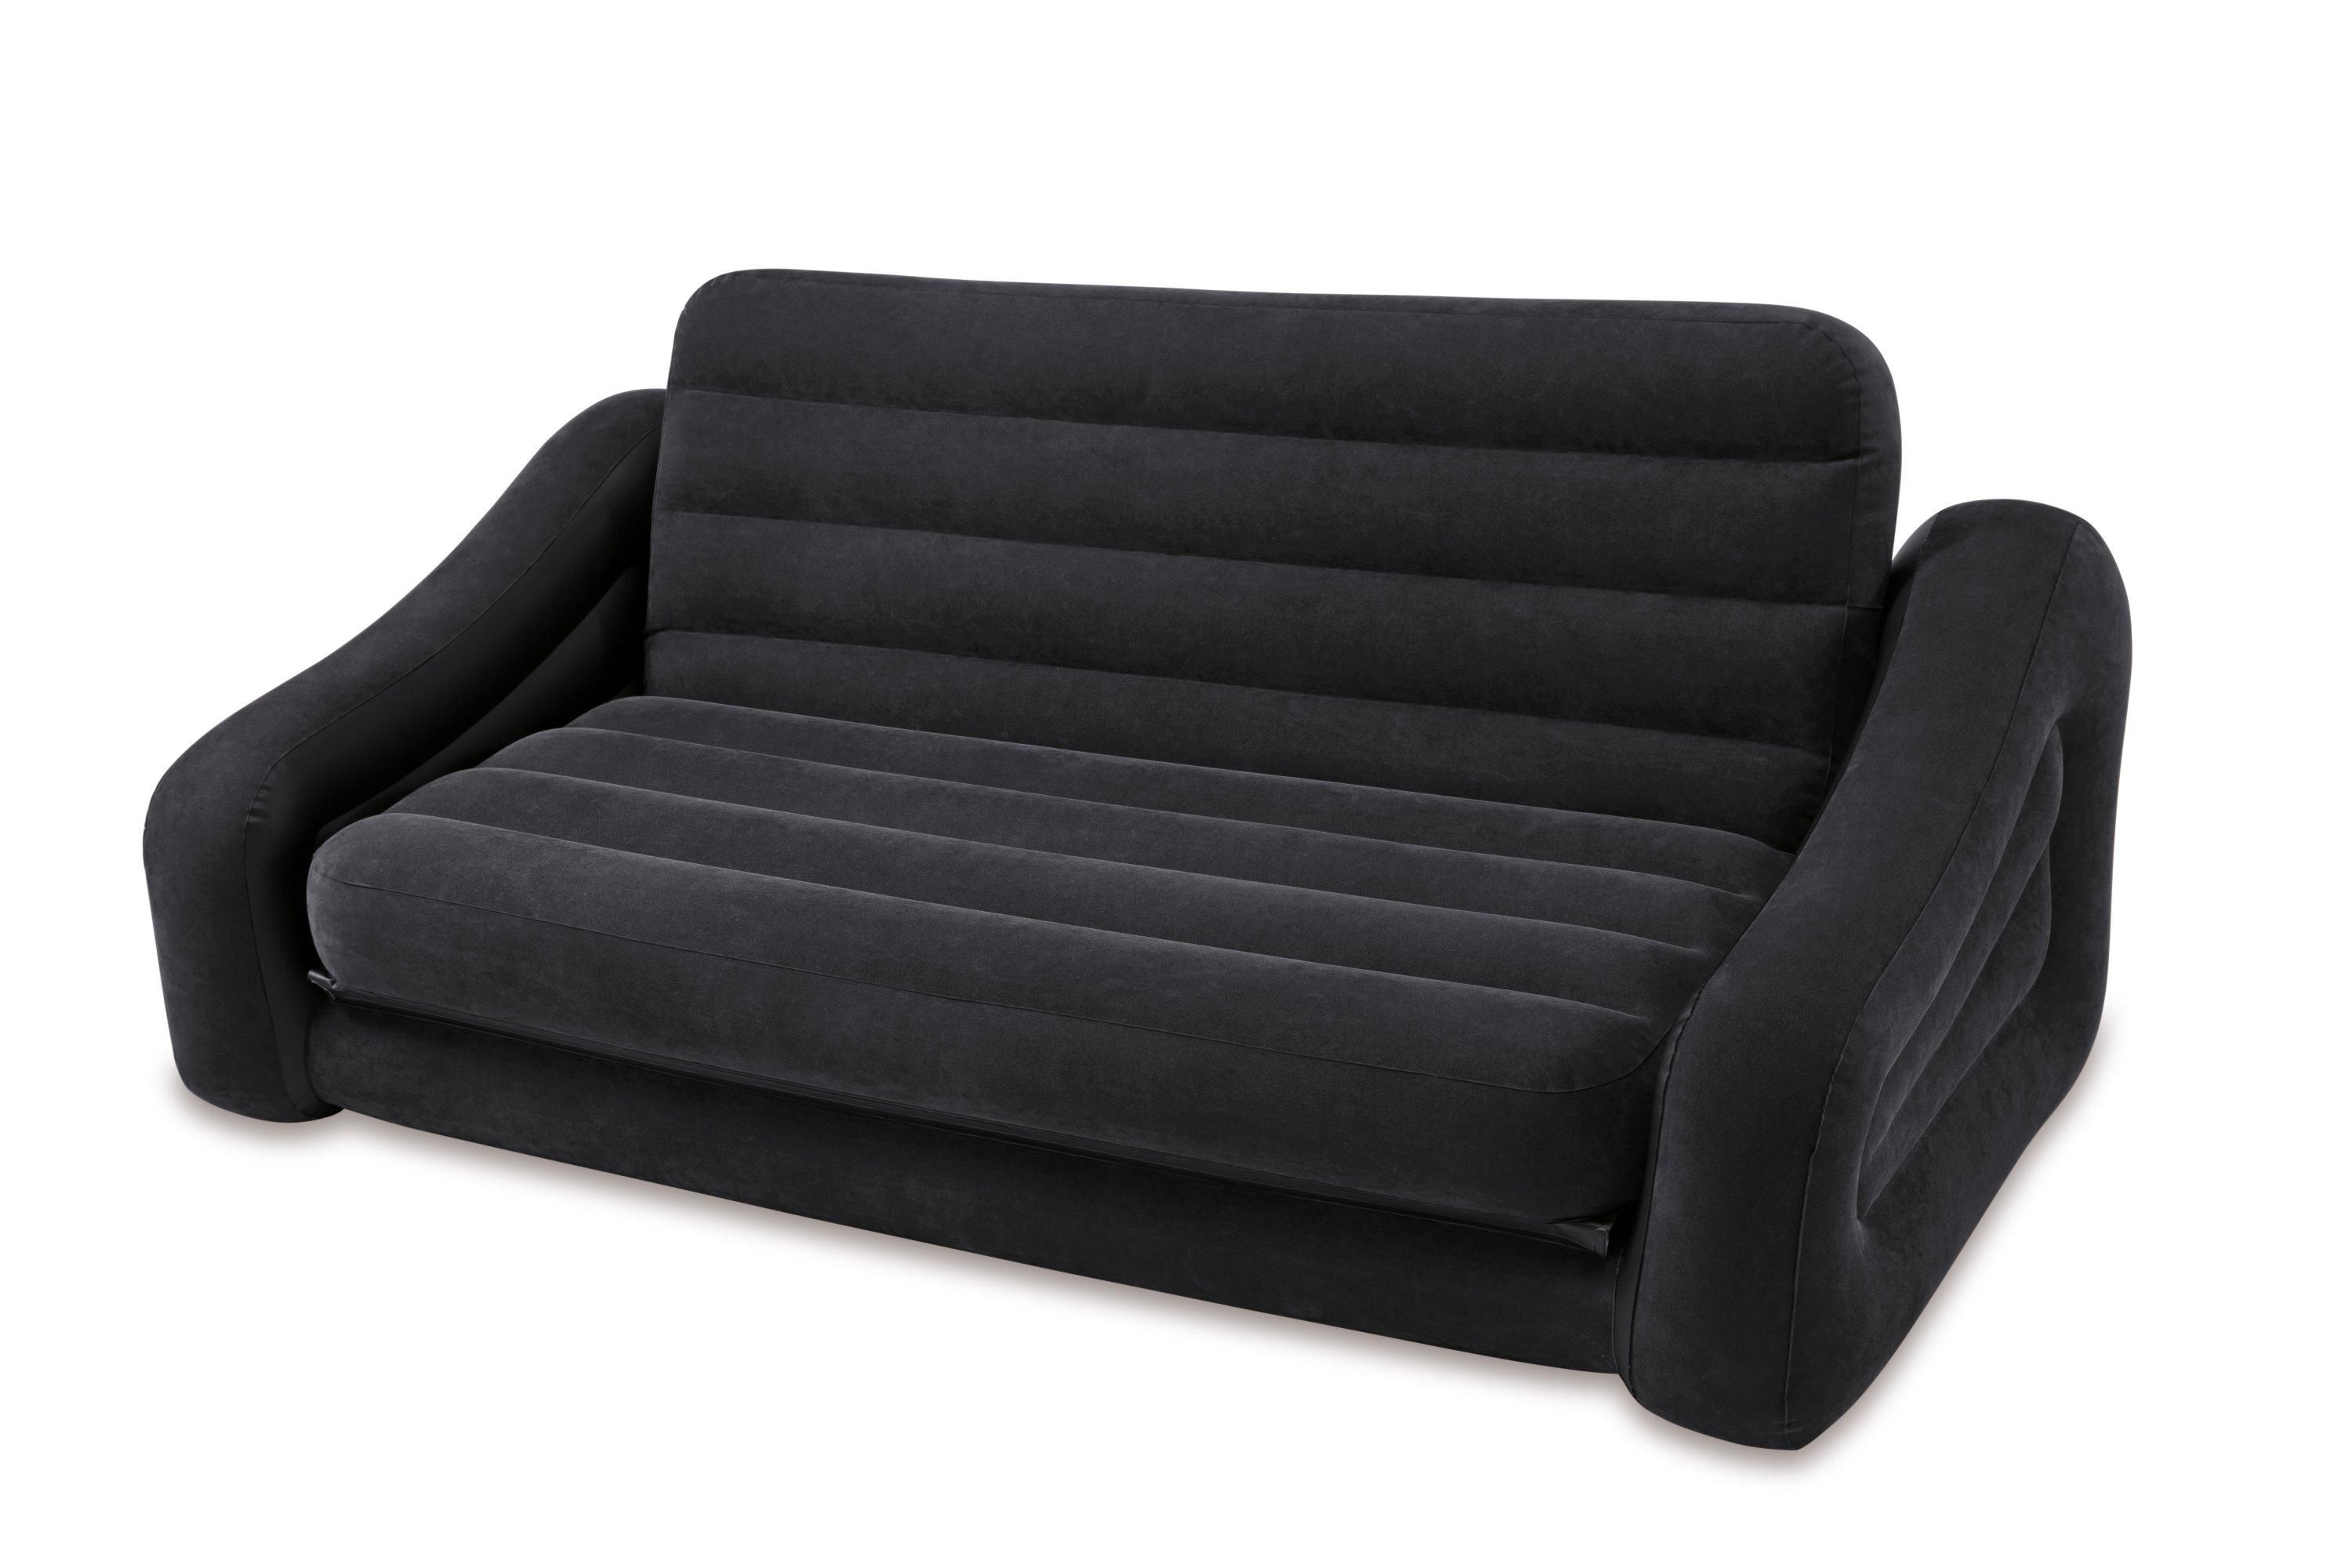 Intex Inflatable Pull Out Sofa Queen Bed Sleeper 68566ep + 66619e Regarding Intex Sleep Sofas (View 6 of 20)